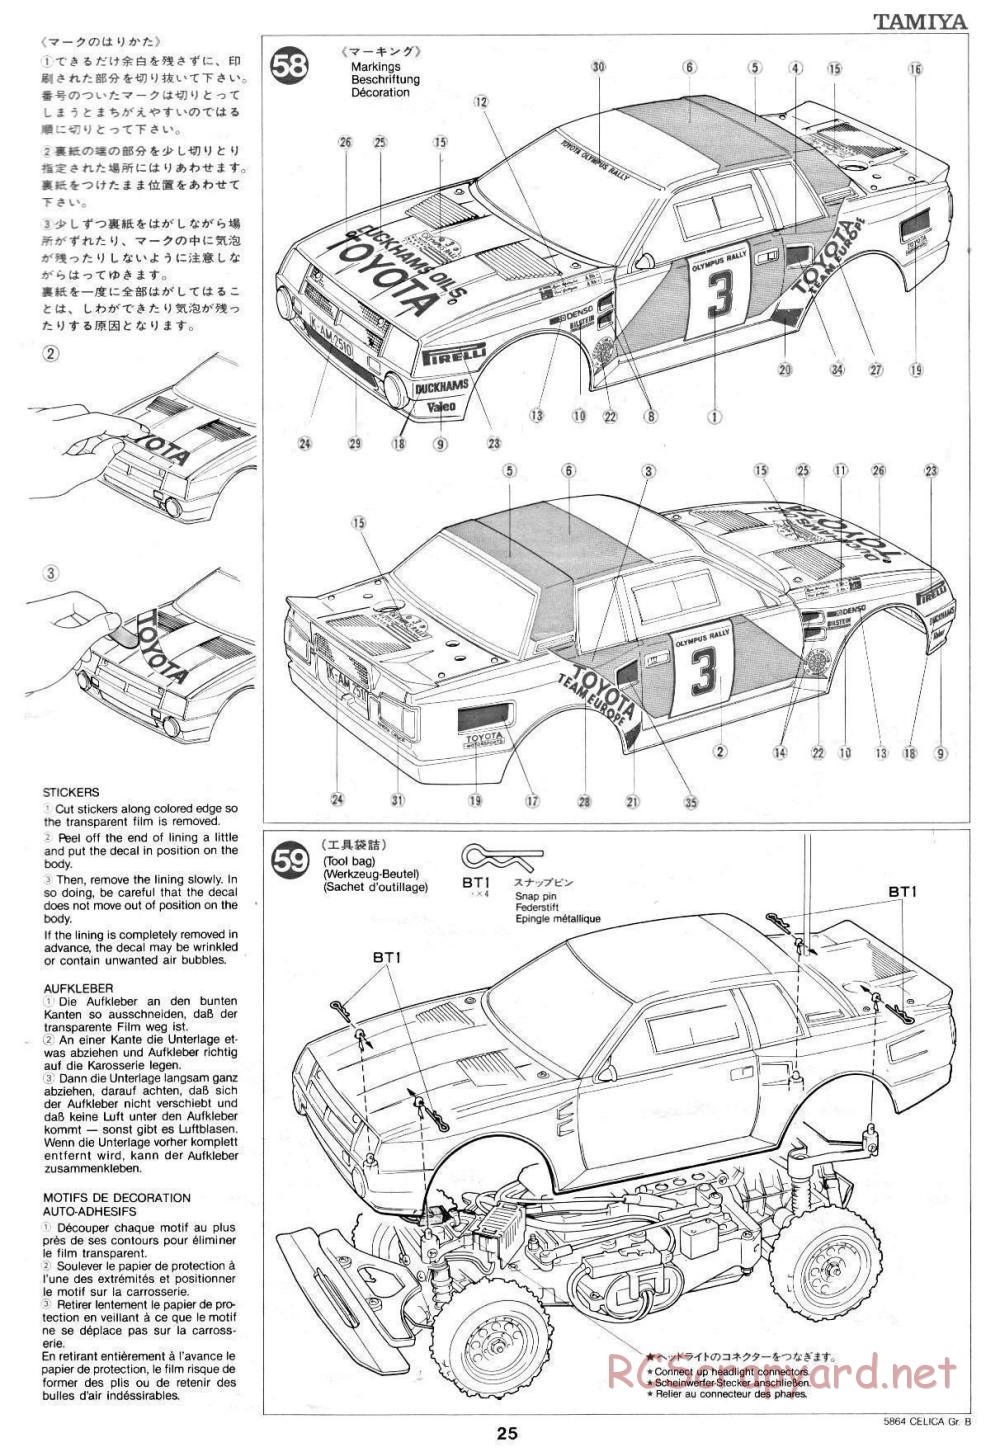 Tamiya - Toyota Celica Gr.B Rally Special - 58064 - Manual - Page 25